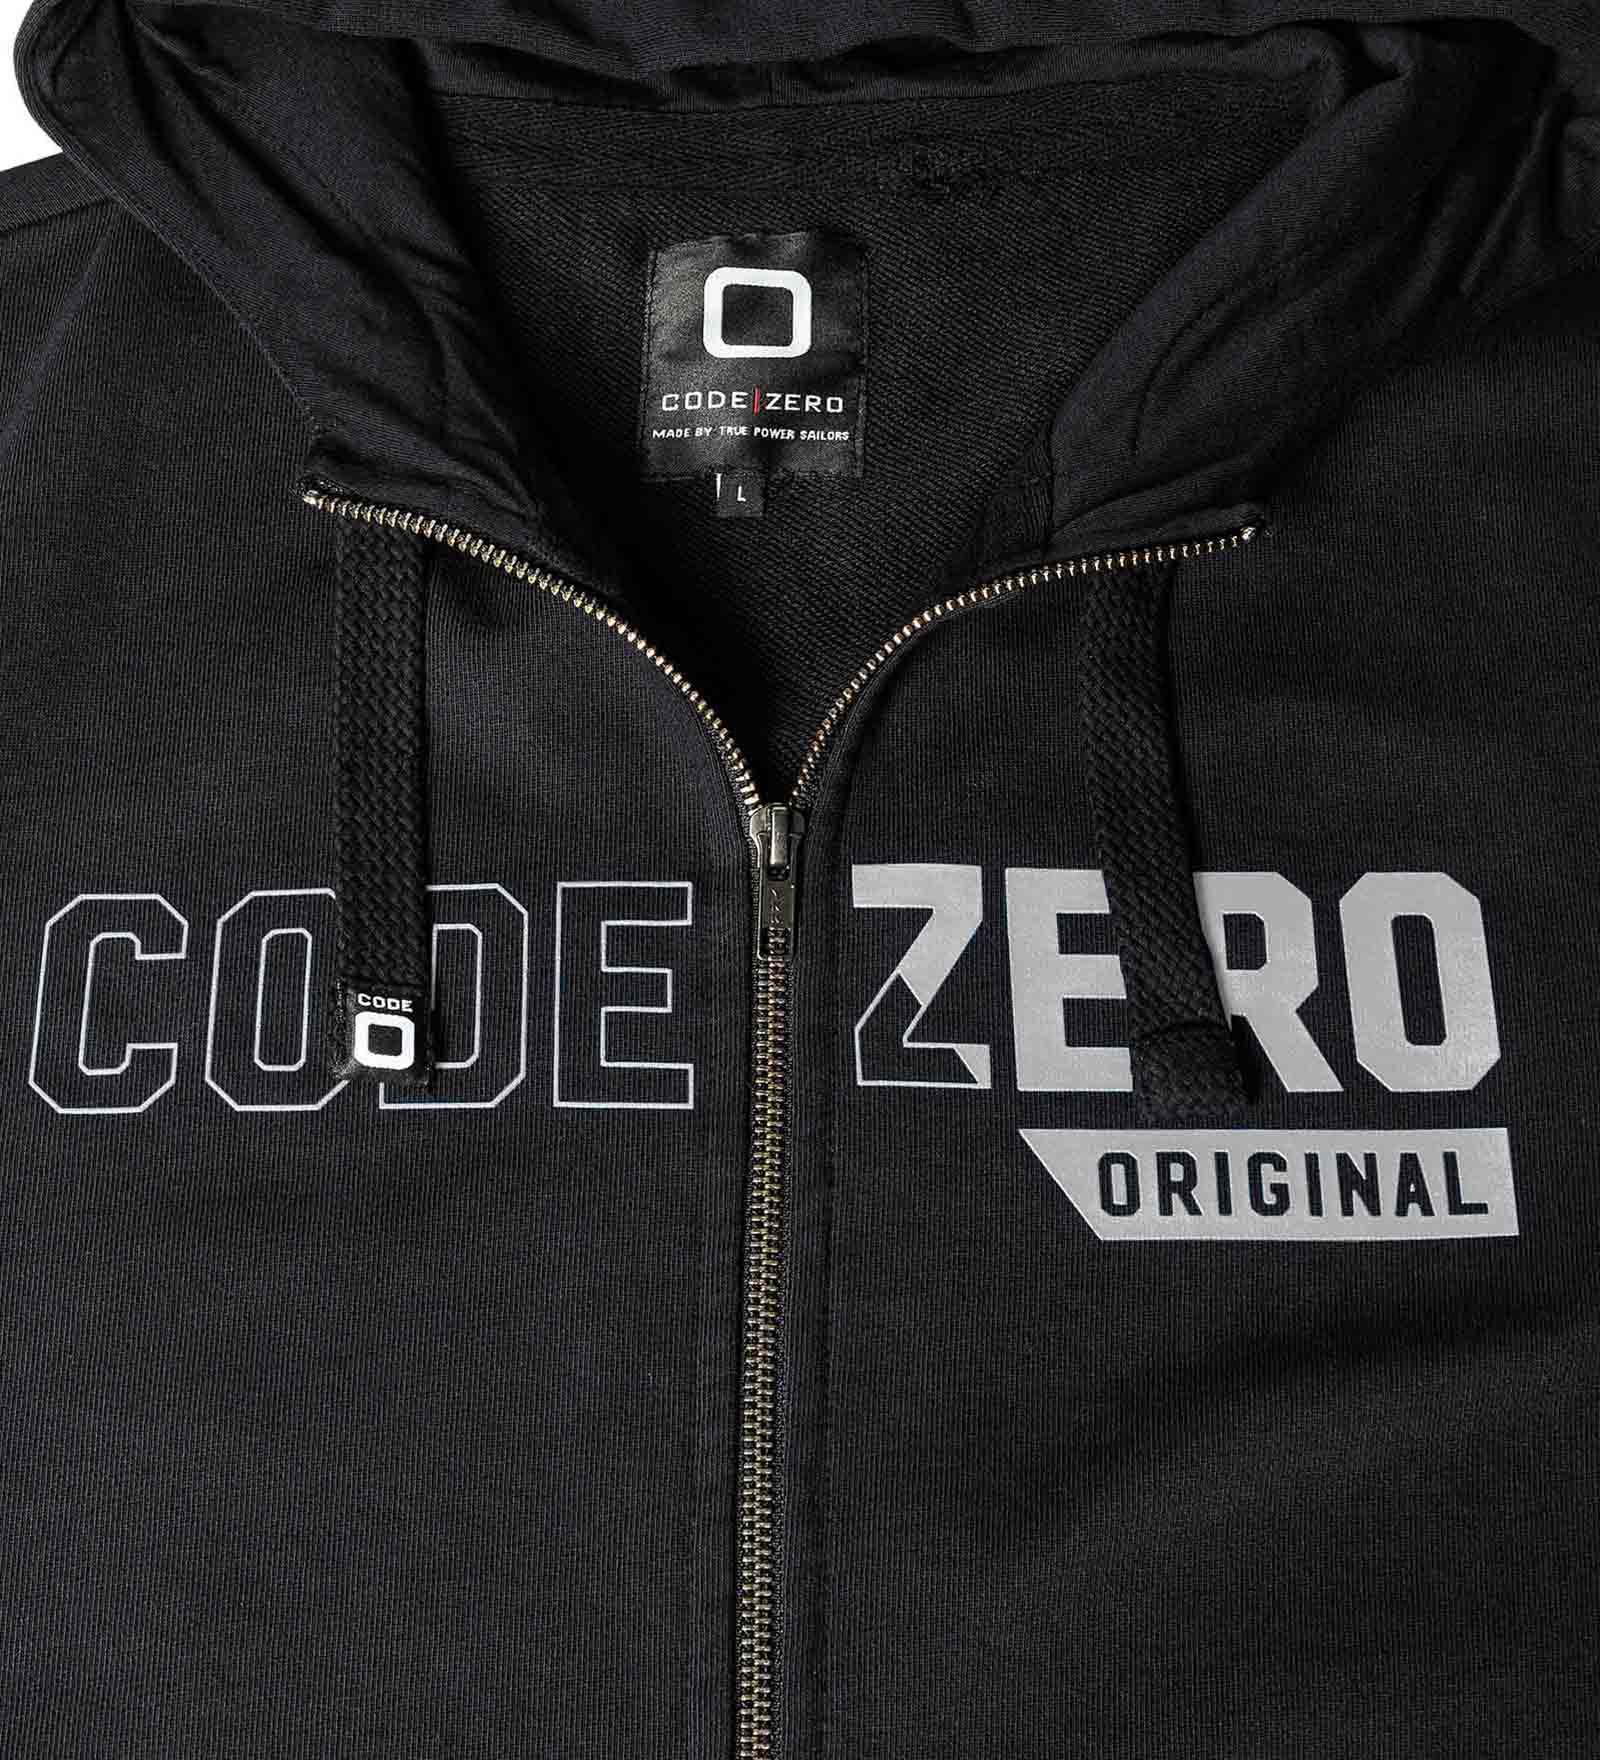 Light grey logo and a zip